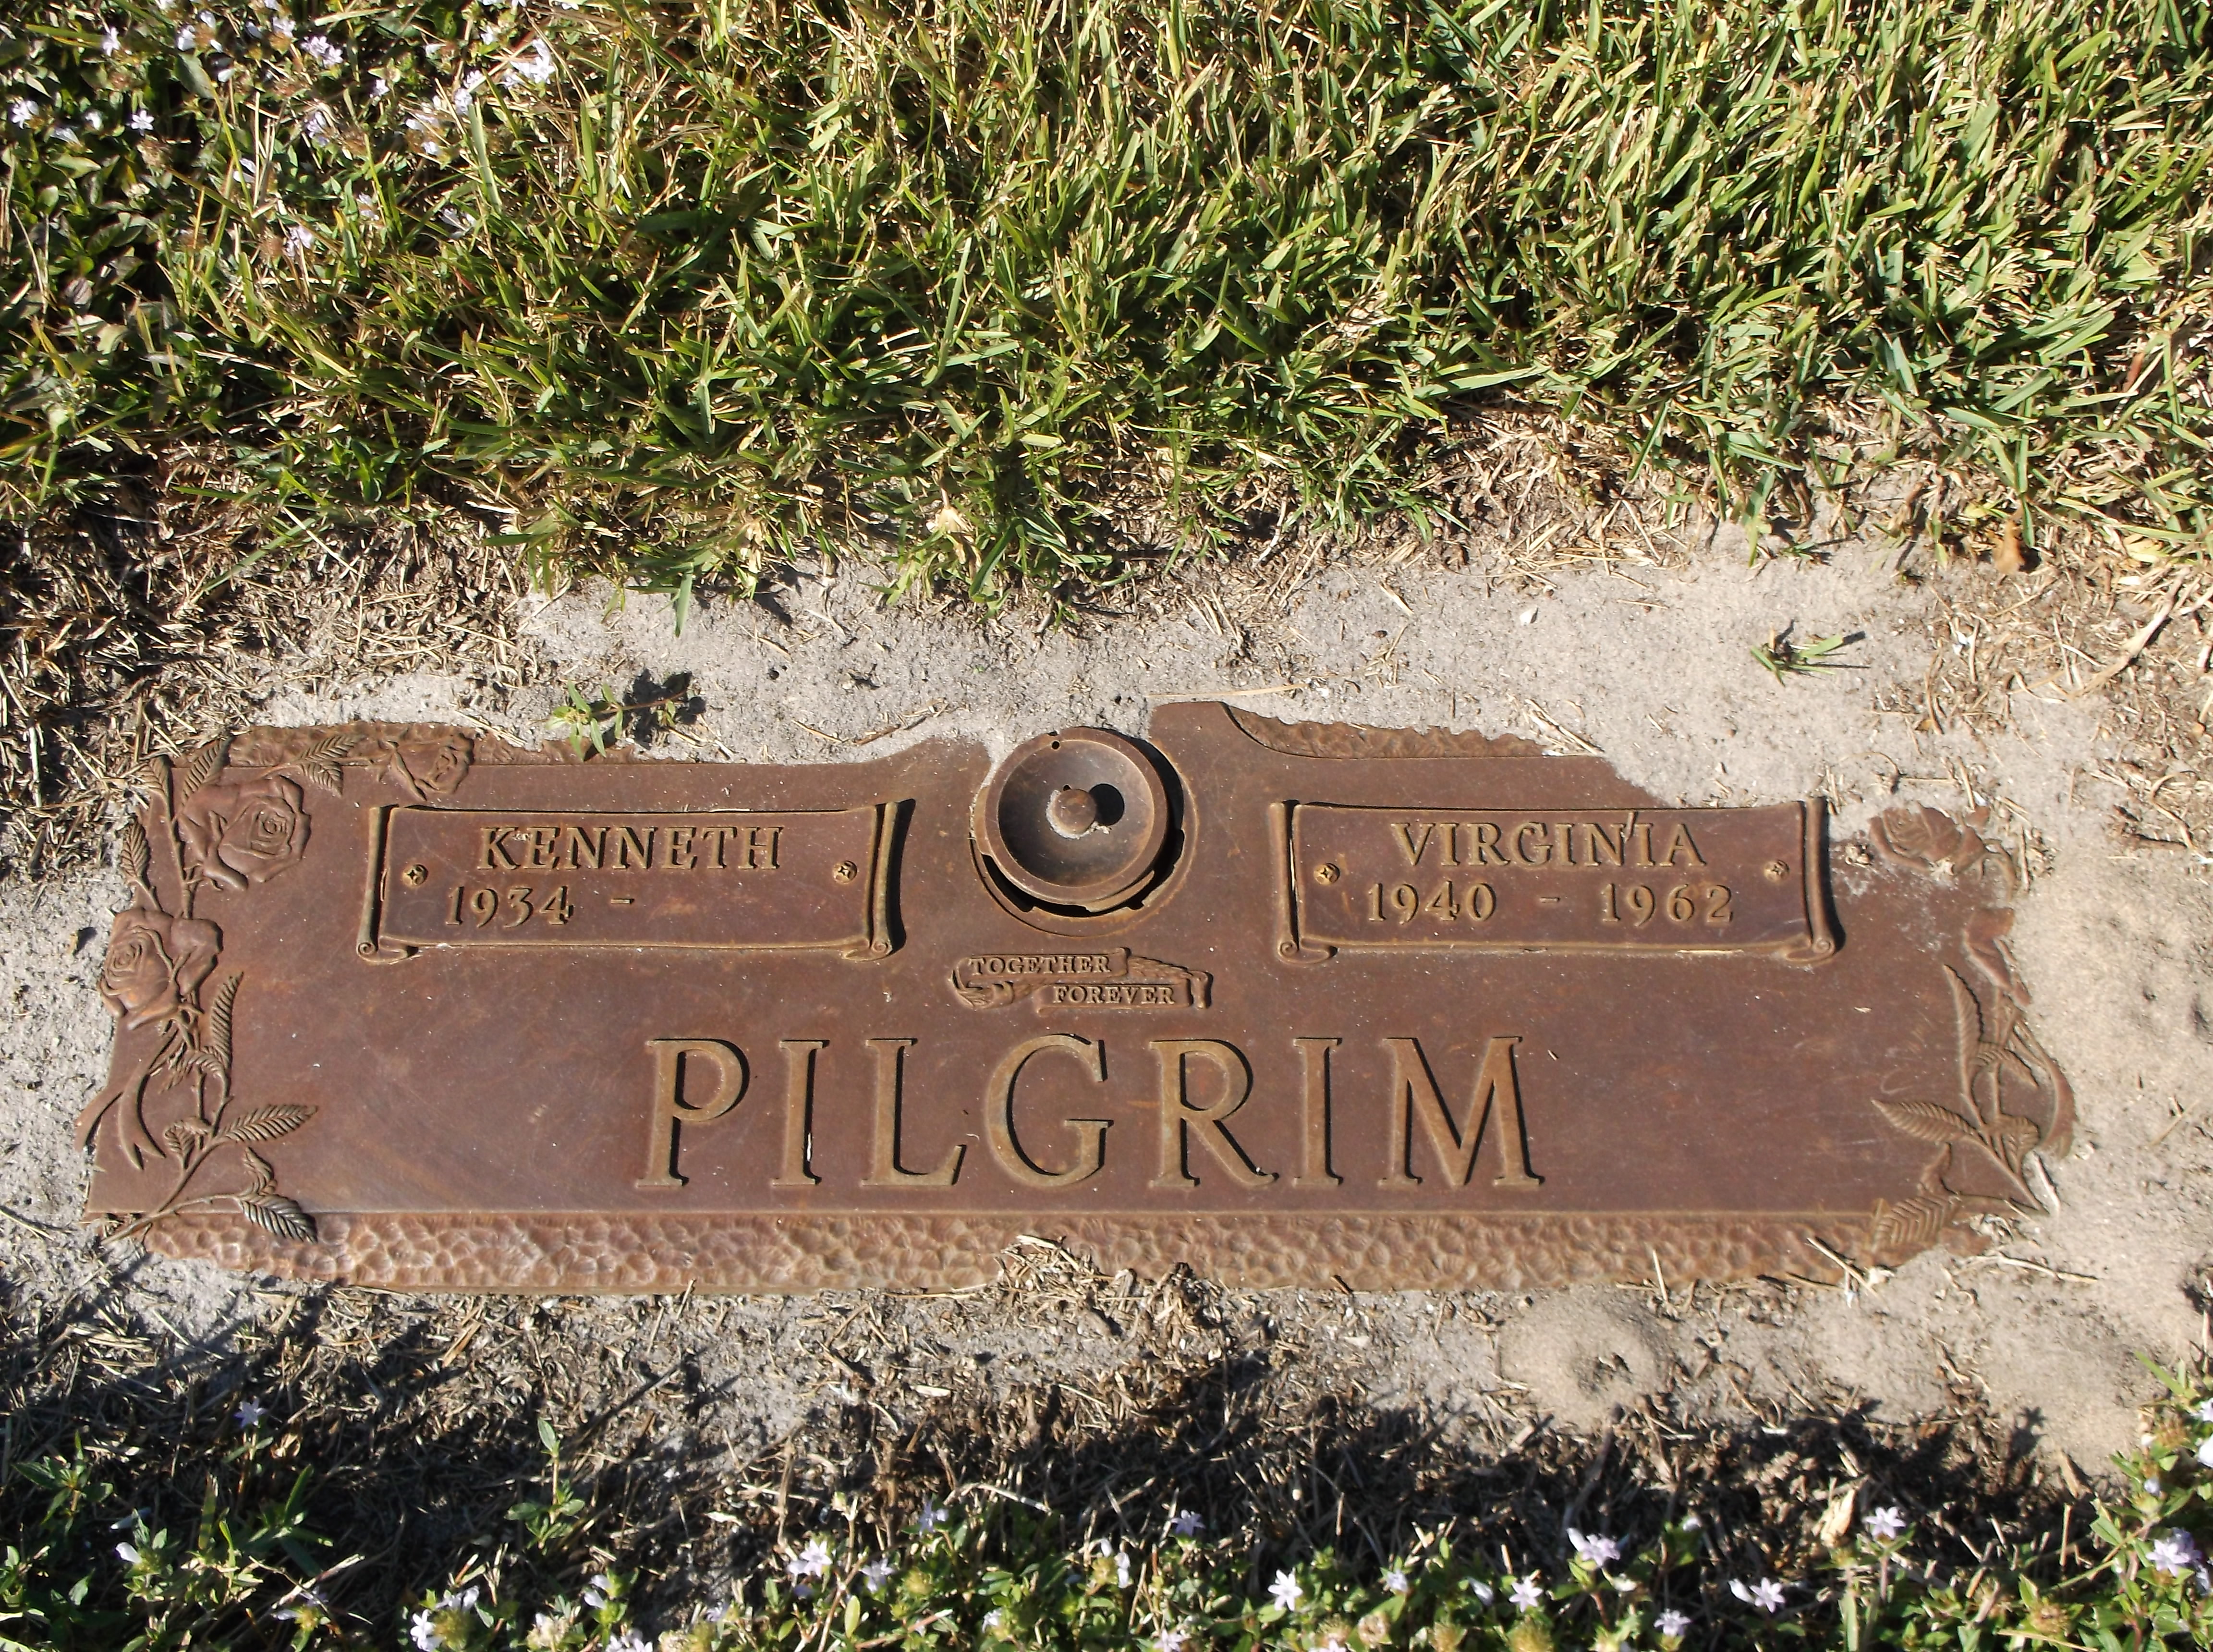 Kenneth Pilgrim